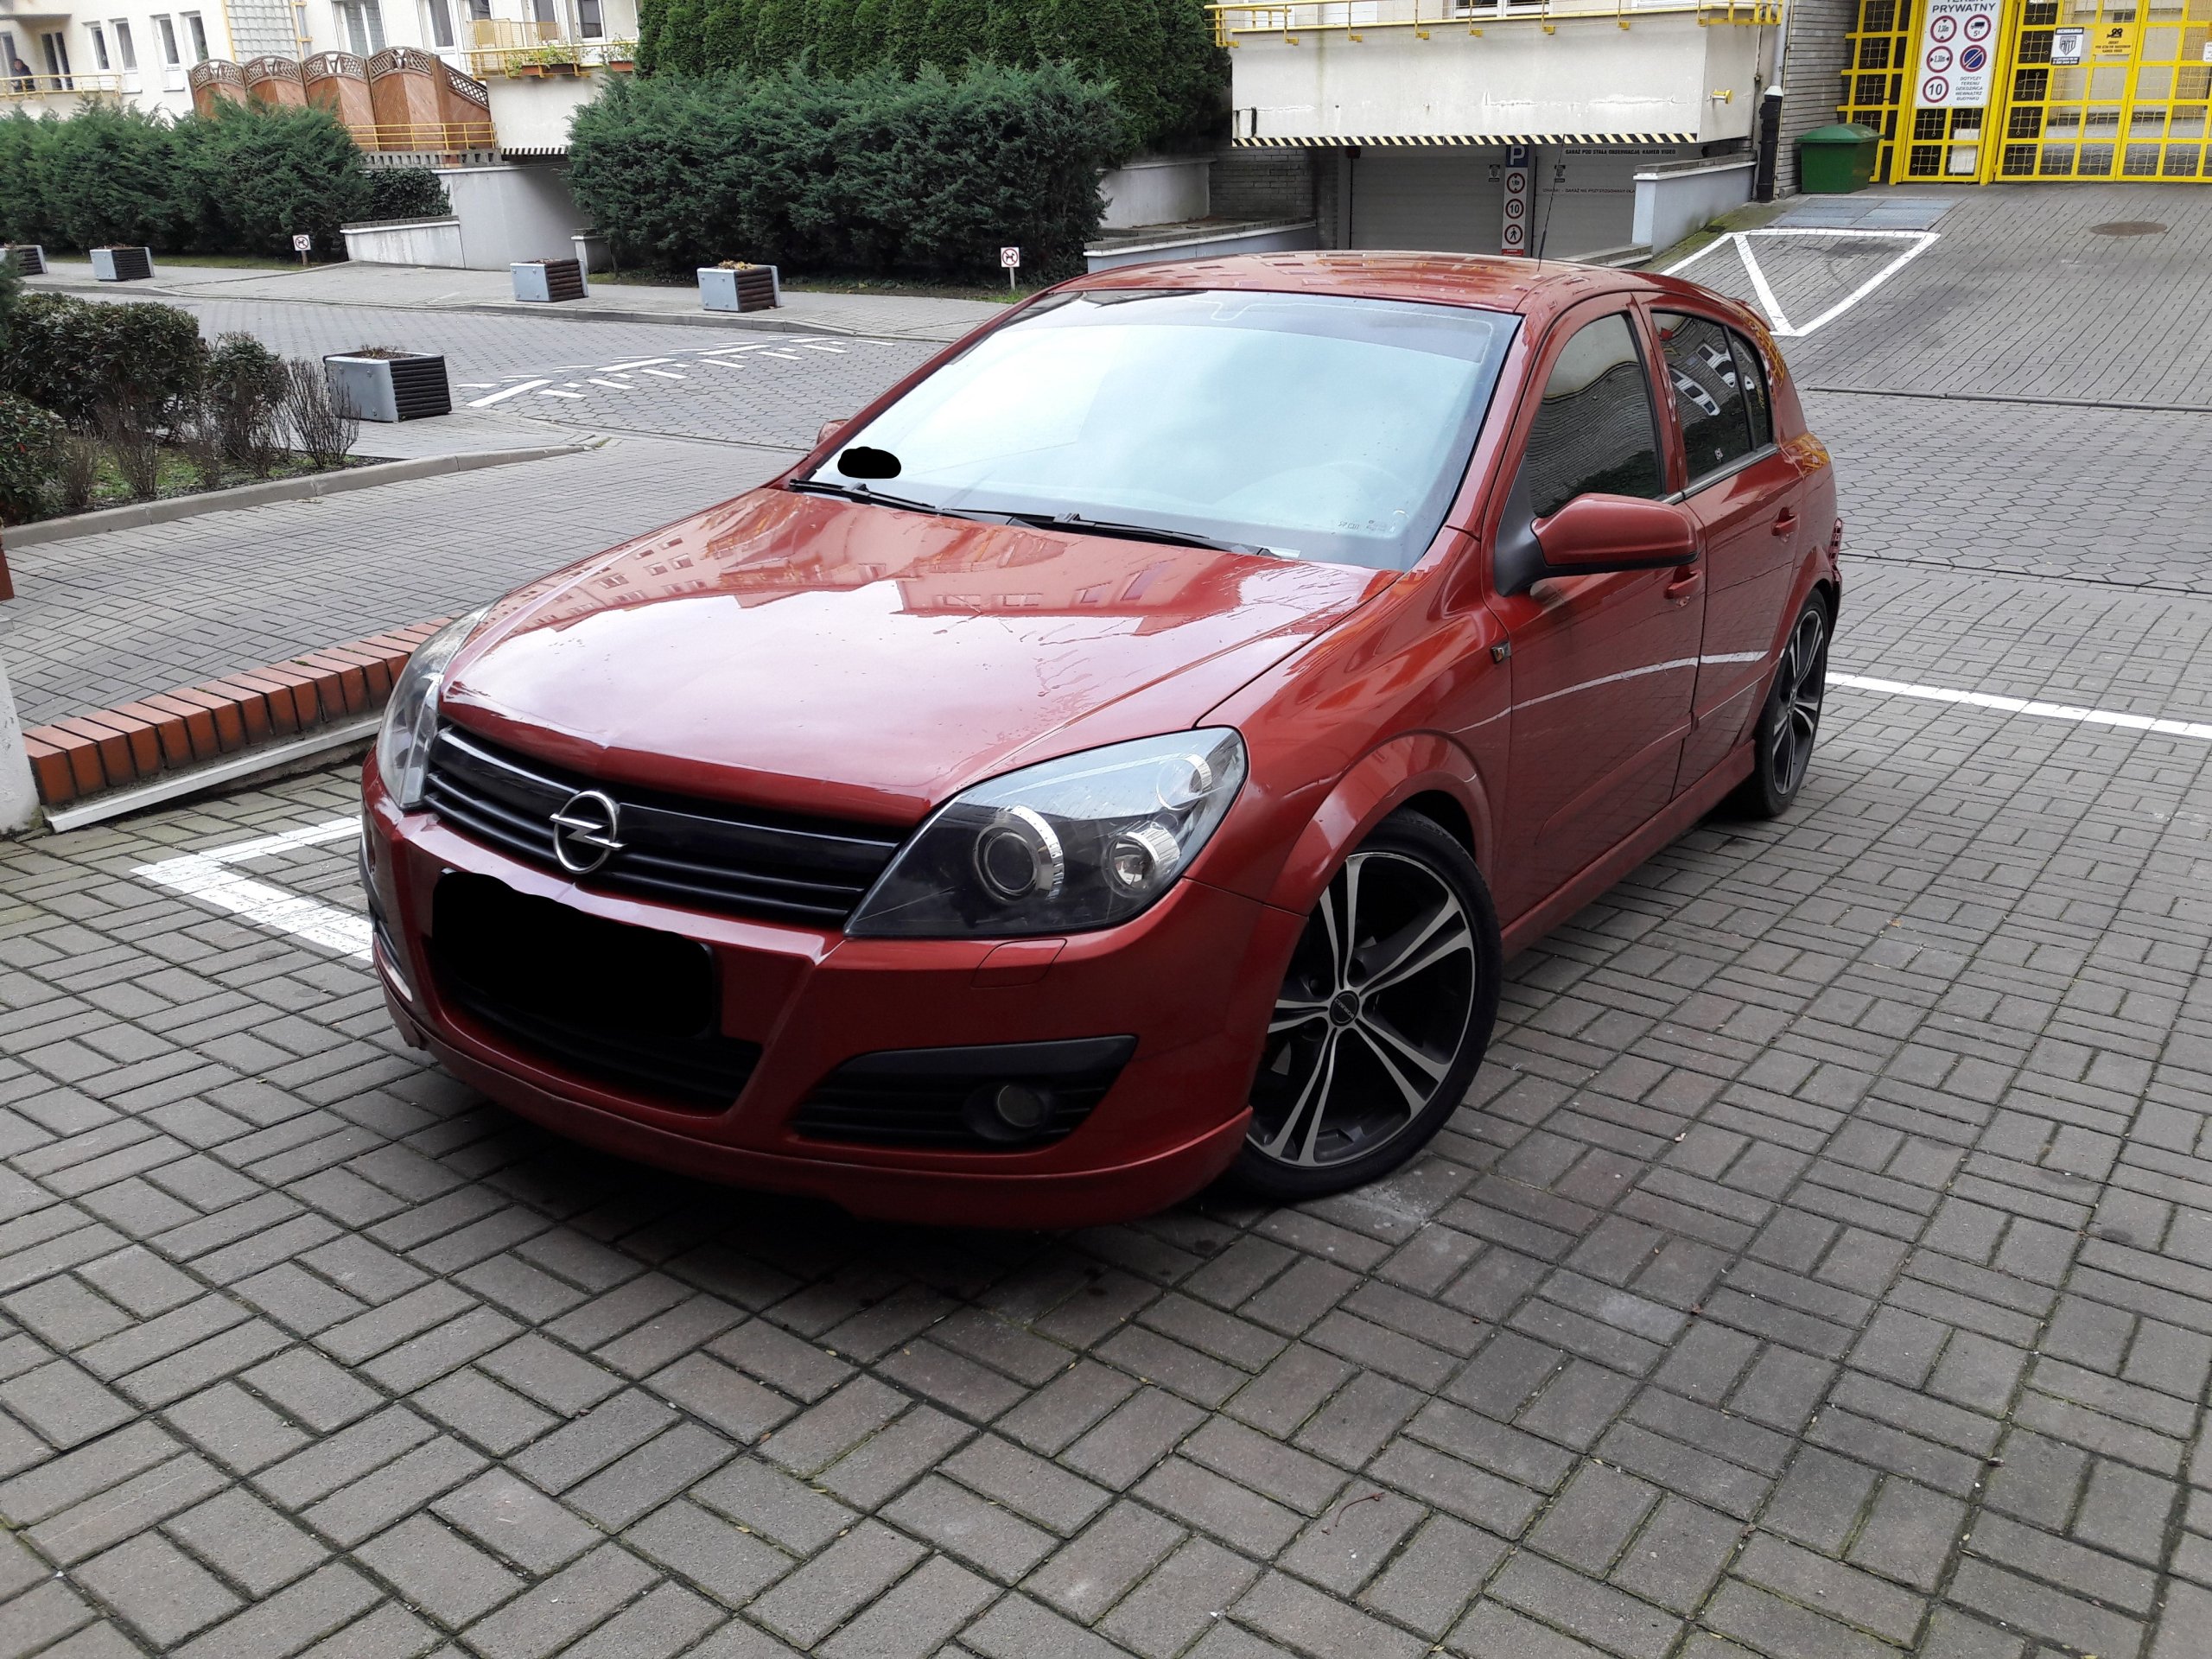 Opel Astra H Opc Line 1 6 Benzyna Lpg Klima Xenon 7043123756 Oficjalne Archiwum Allegro